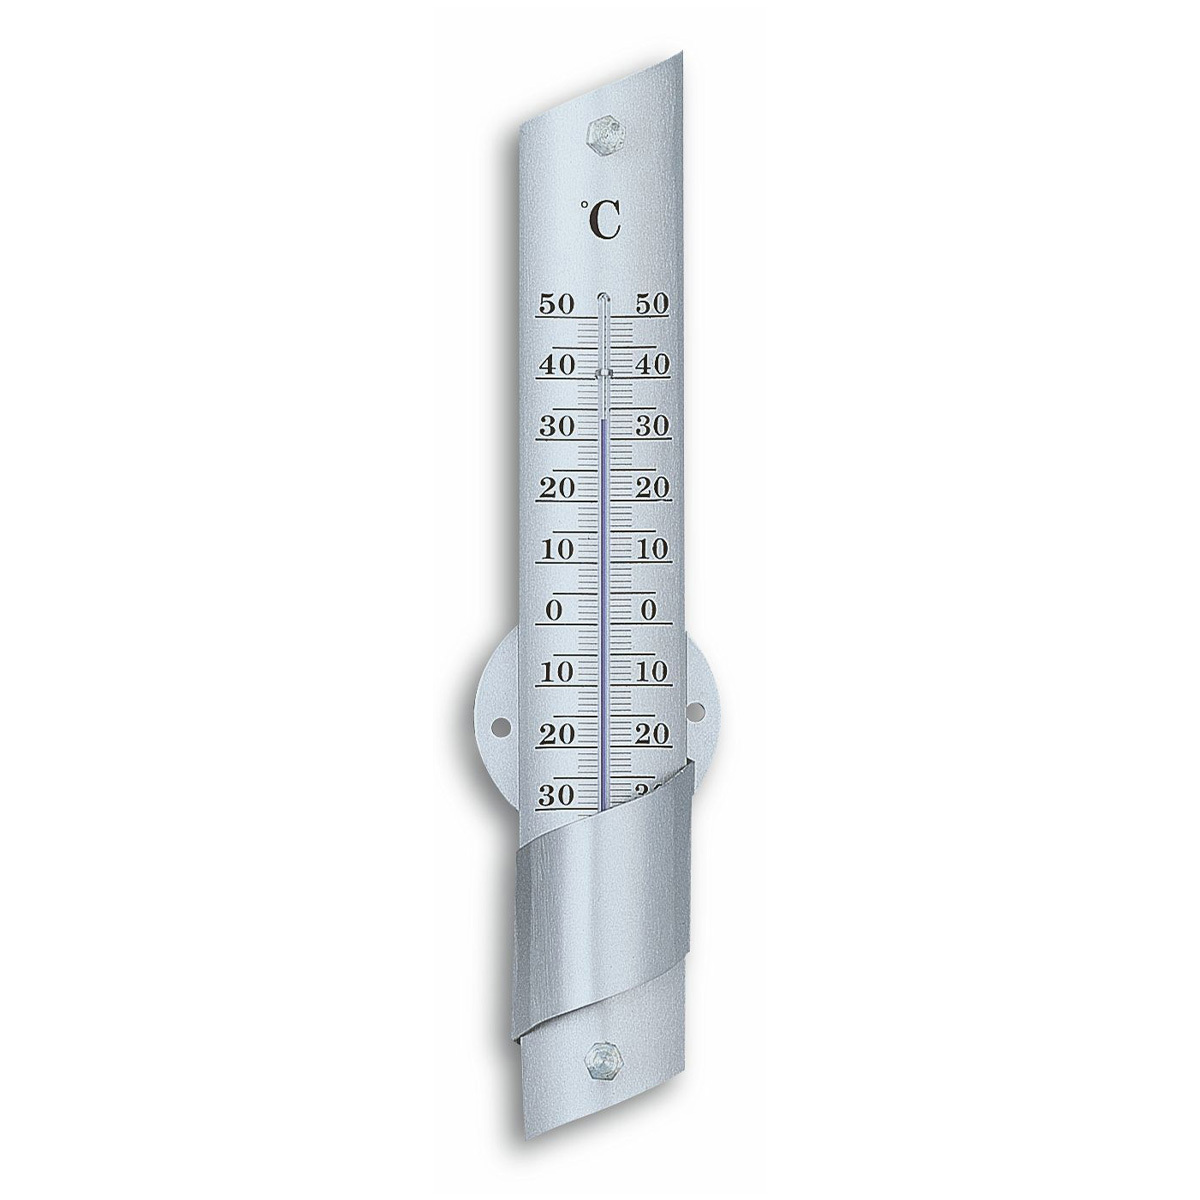 12-2029-analoges-innen-aussen-thermometer-aluminium-1200x1200px.jpg